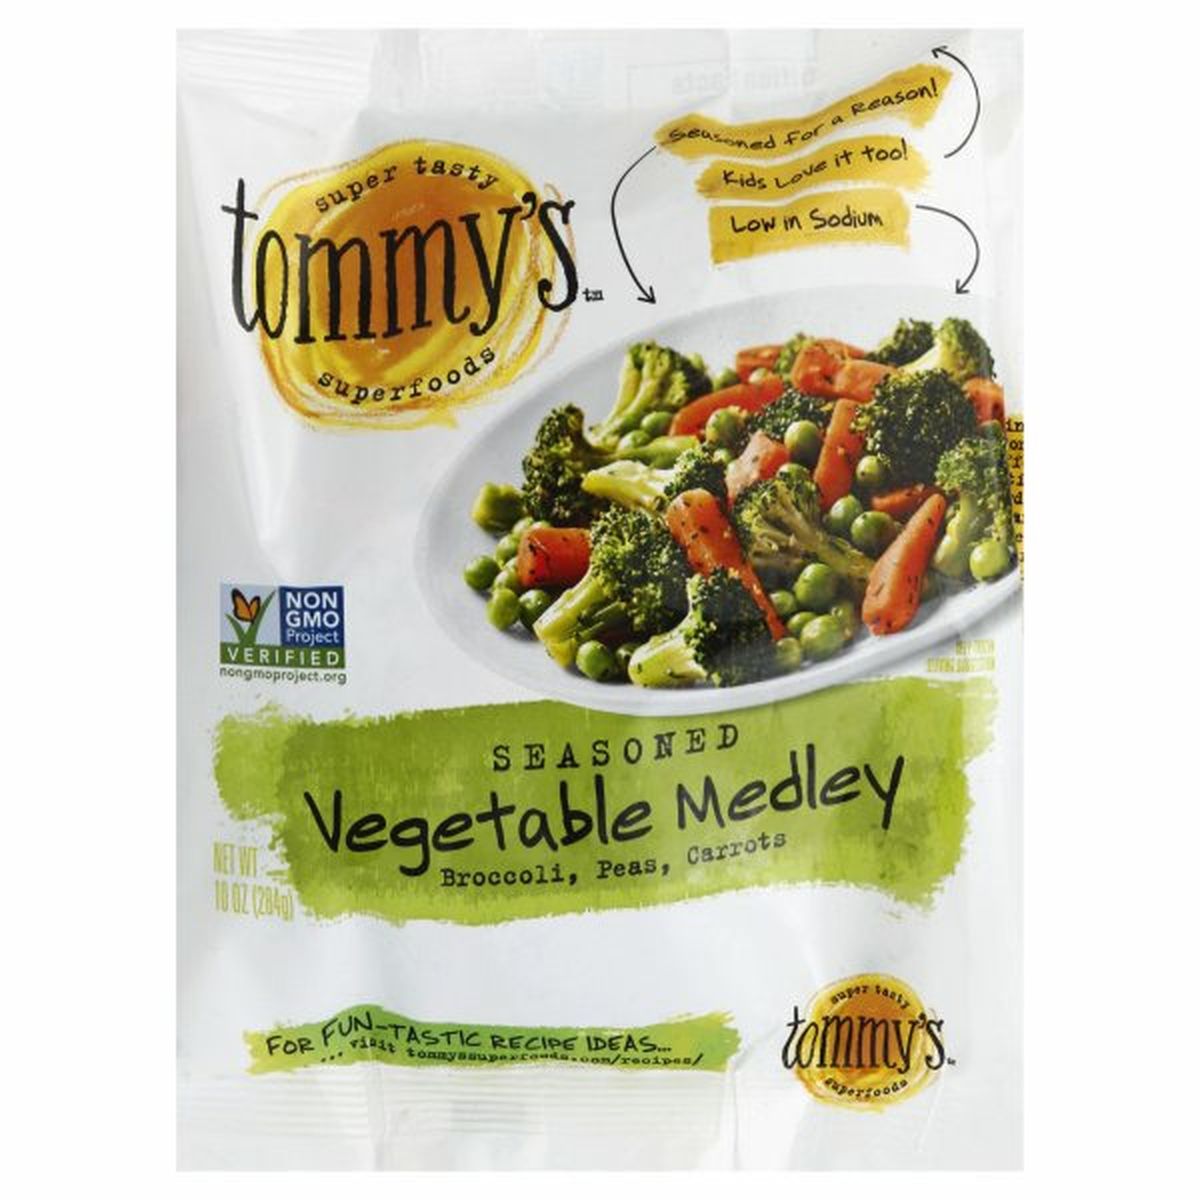 Calories in Tommys Vegetable Medley, Seasoned